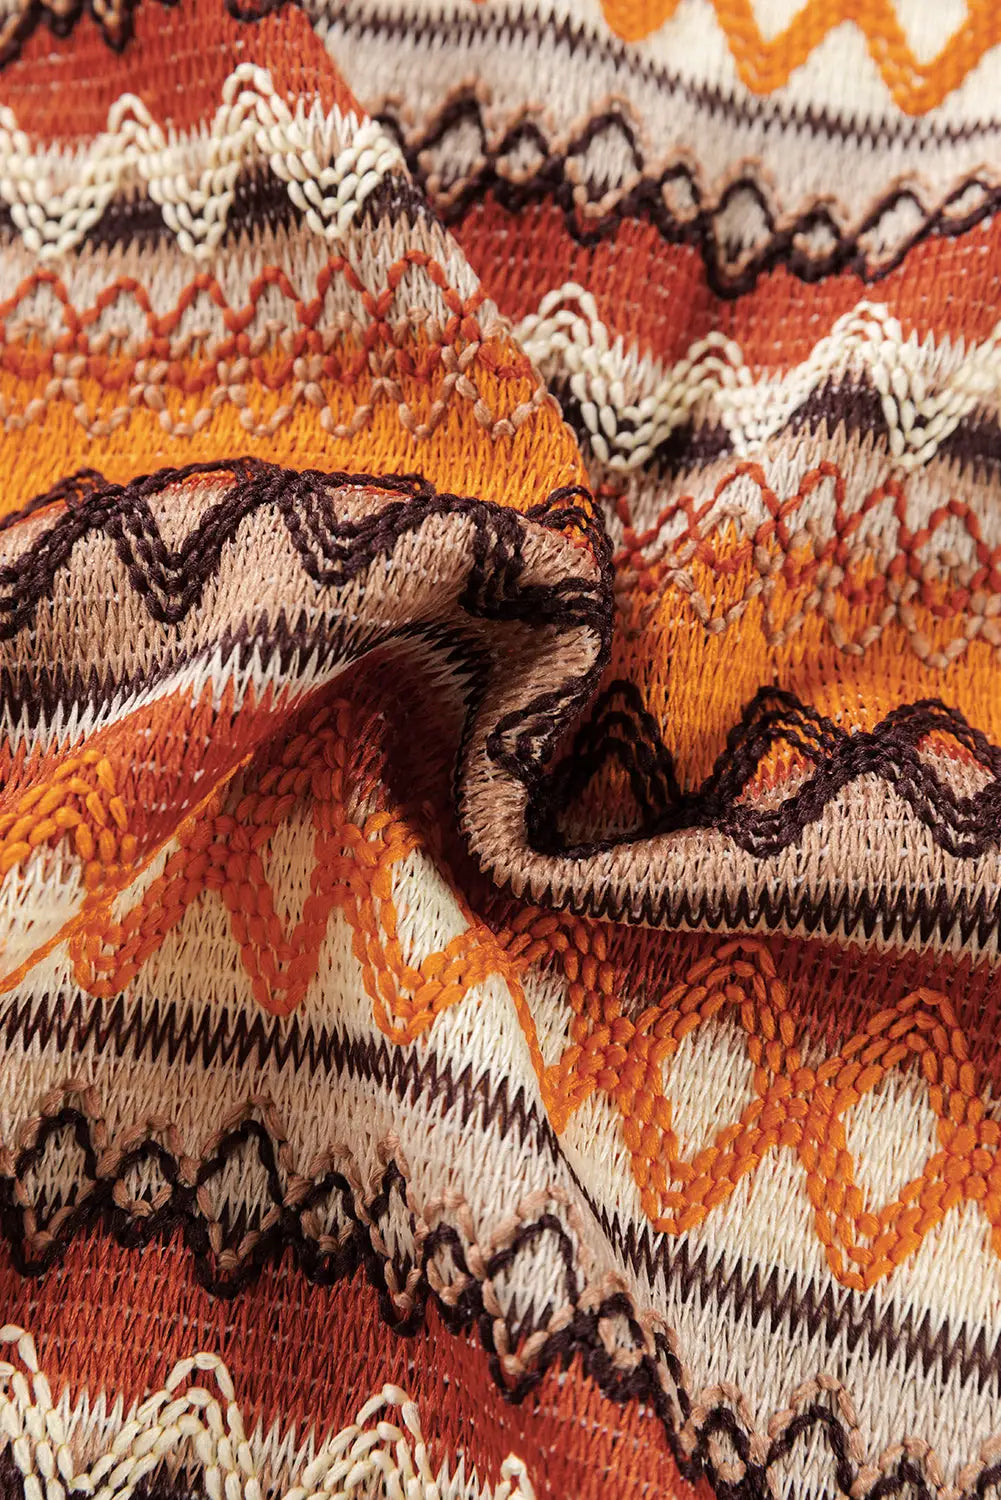 Orange striped jacquard knit tank top - tops